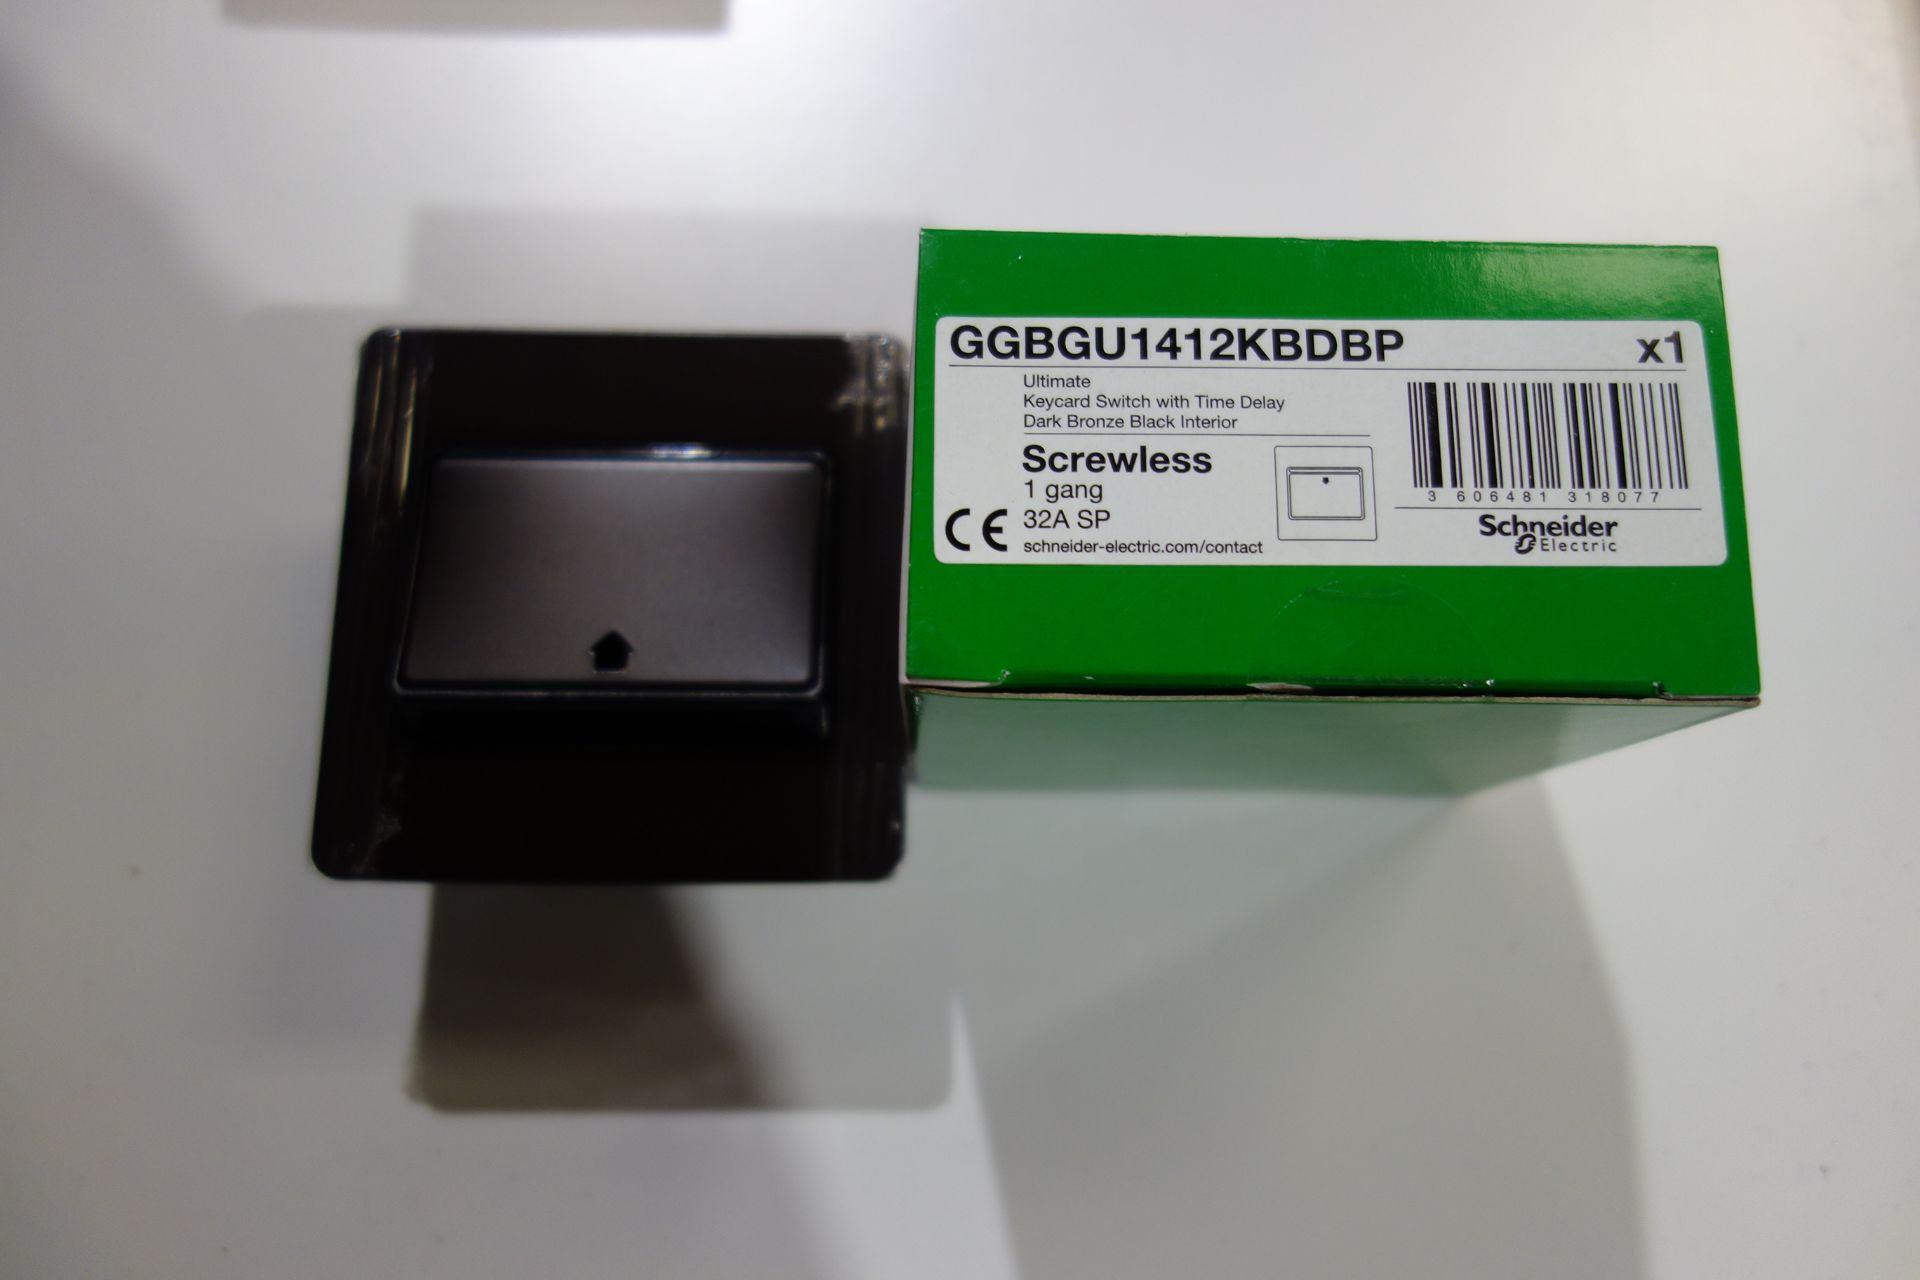 10x Schneider GGBGU1412KBDBP 1 GANG 32A 5 P Key Card Switch With Time Delay. Dark Bronze Black